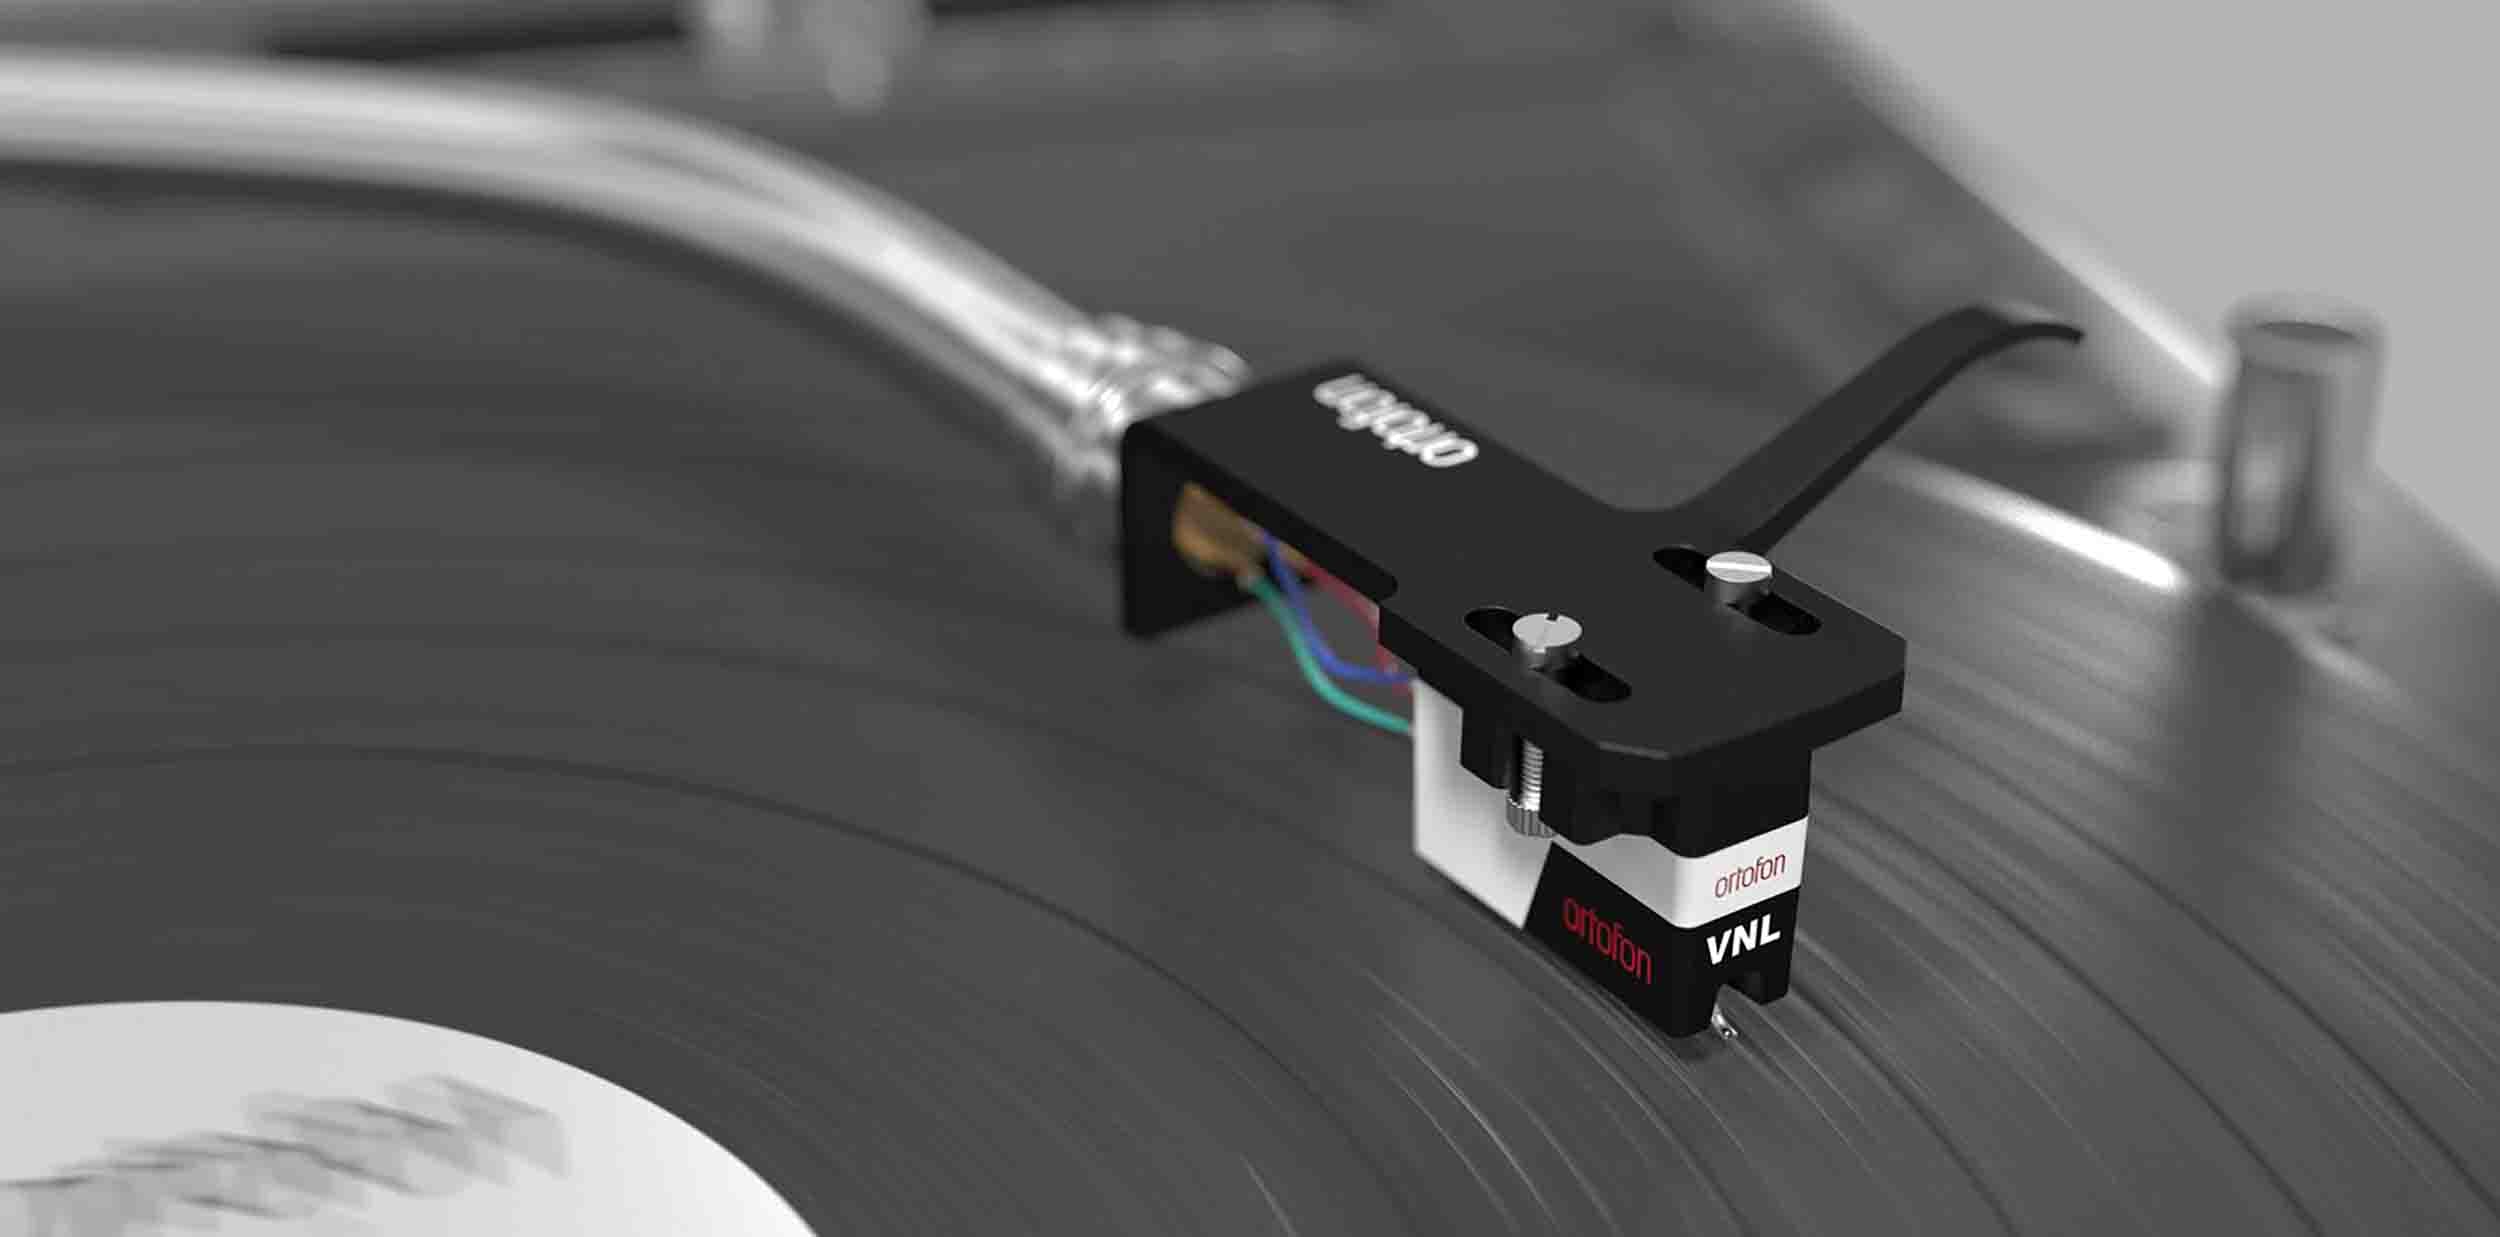 Ortofon VNL Premounted DJ Cartridge and Stylus with SH-4 Headshell - Black - Hollywood DJ